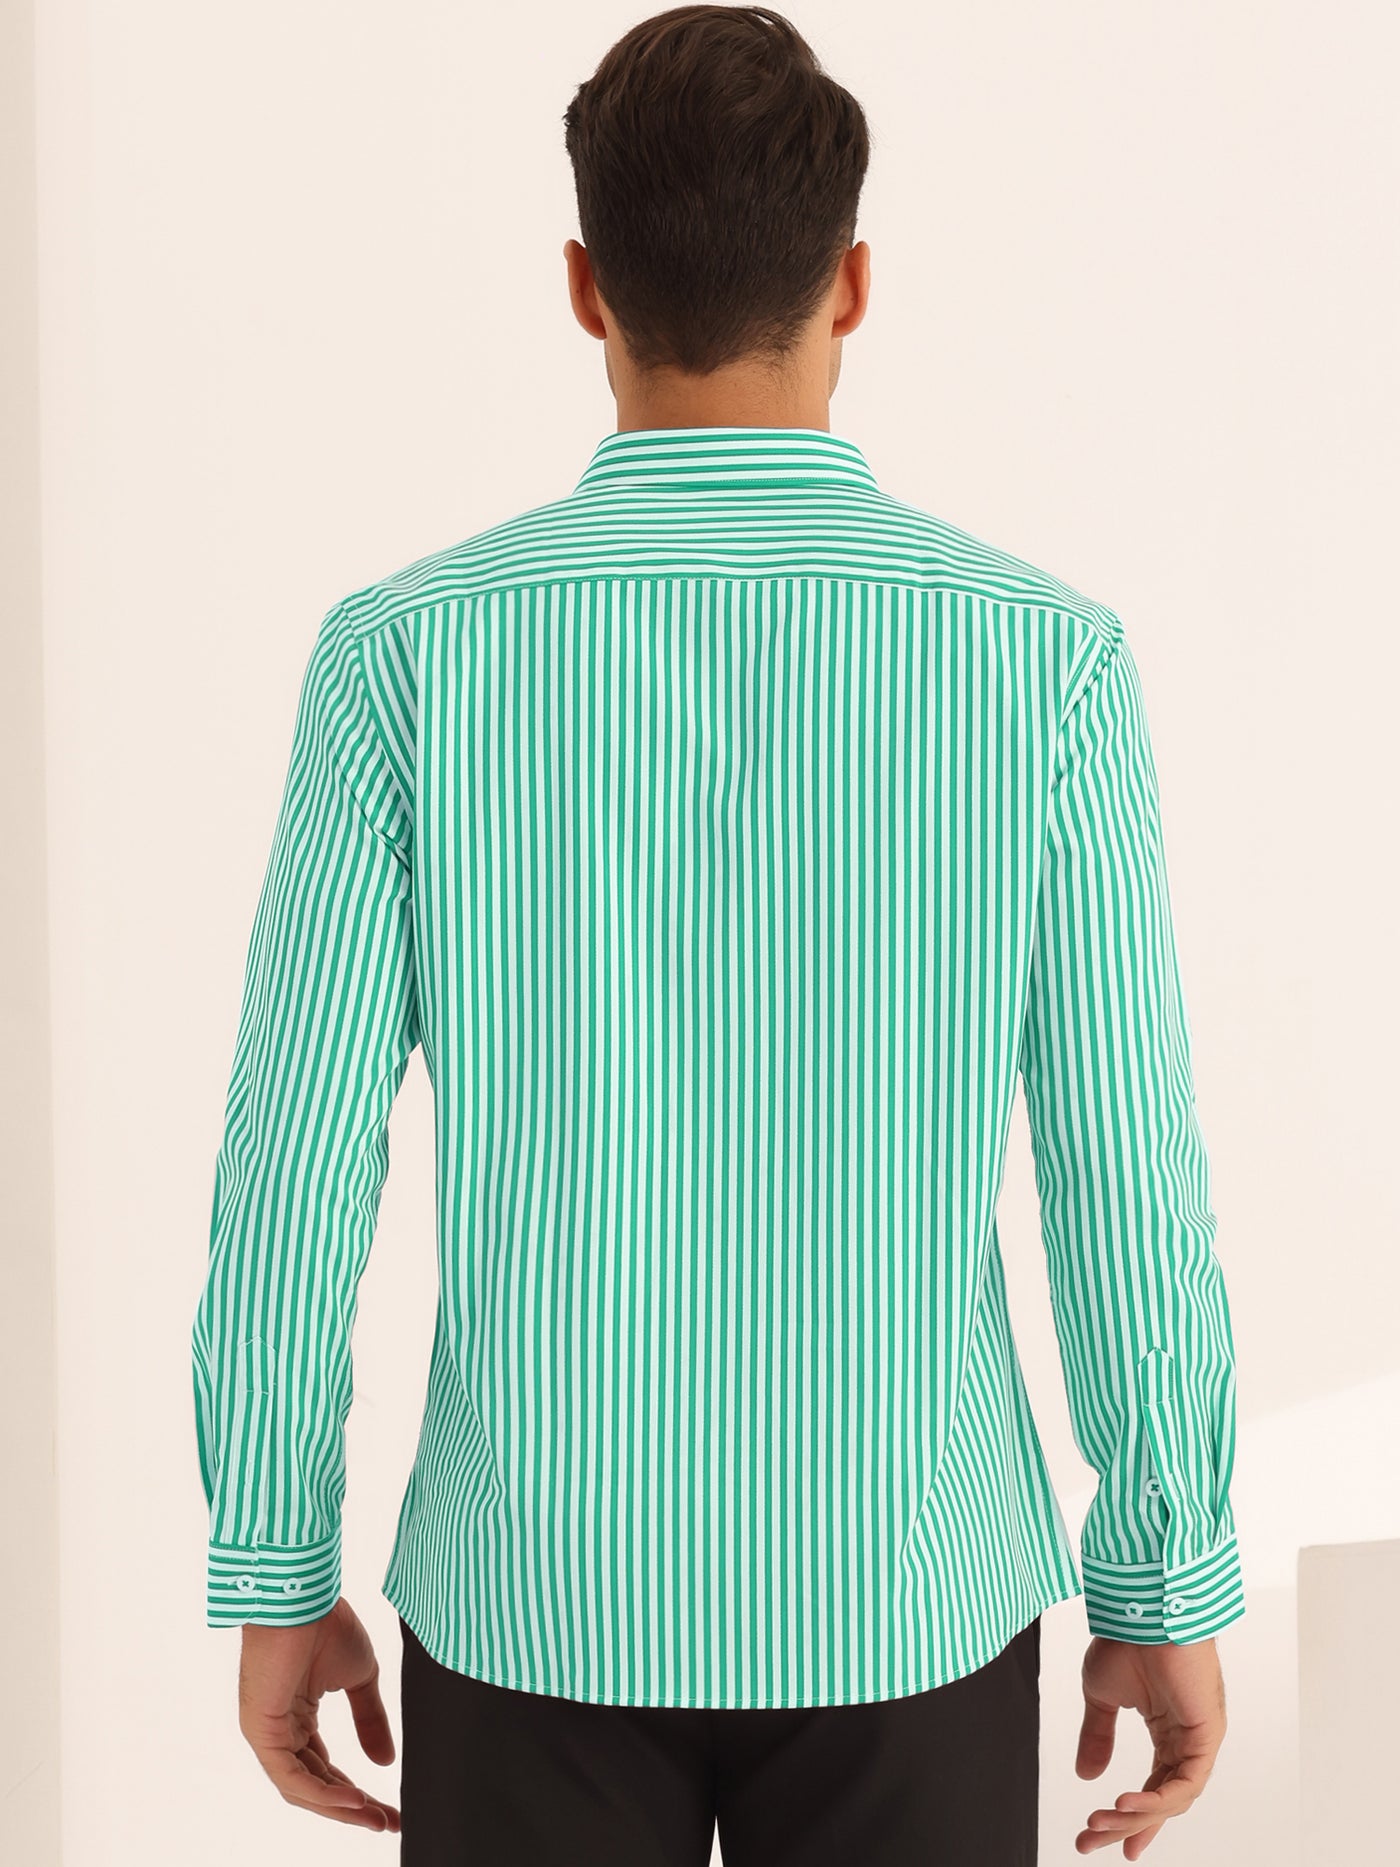 Bublédon Striped Dress Shirts for Men's Business Button Down Long Sleeve Stripes Shirt